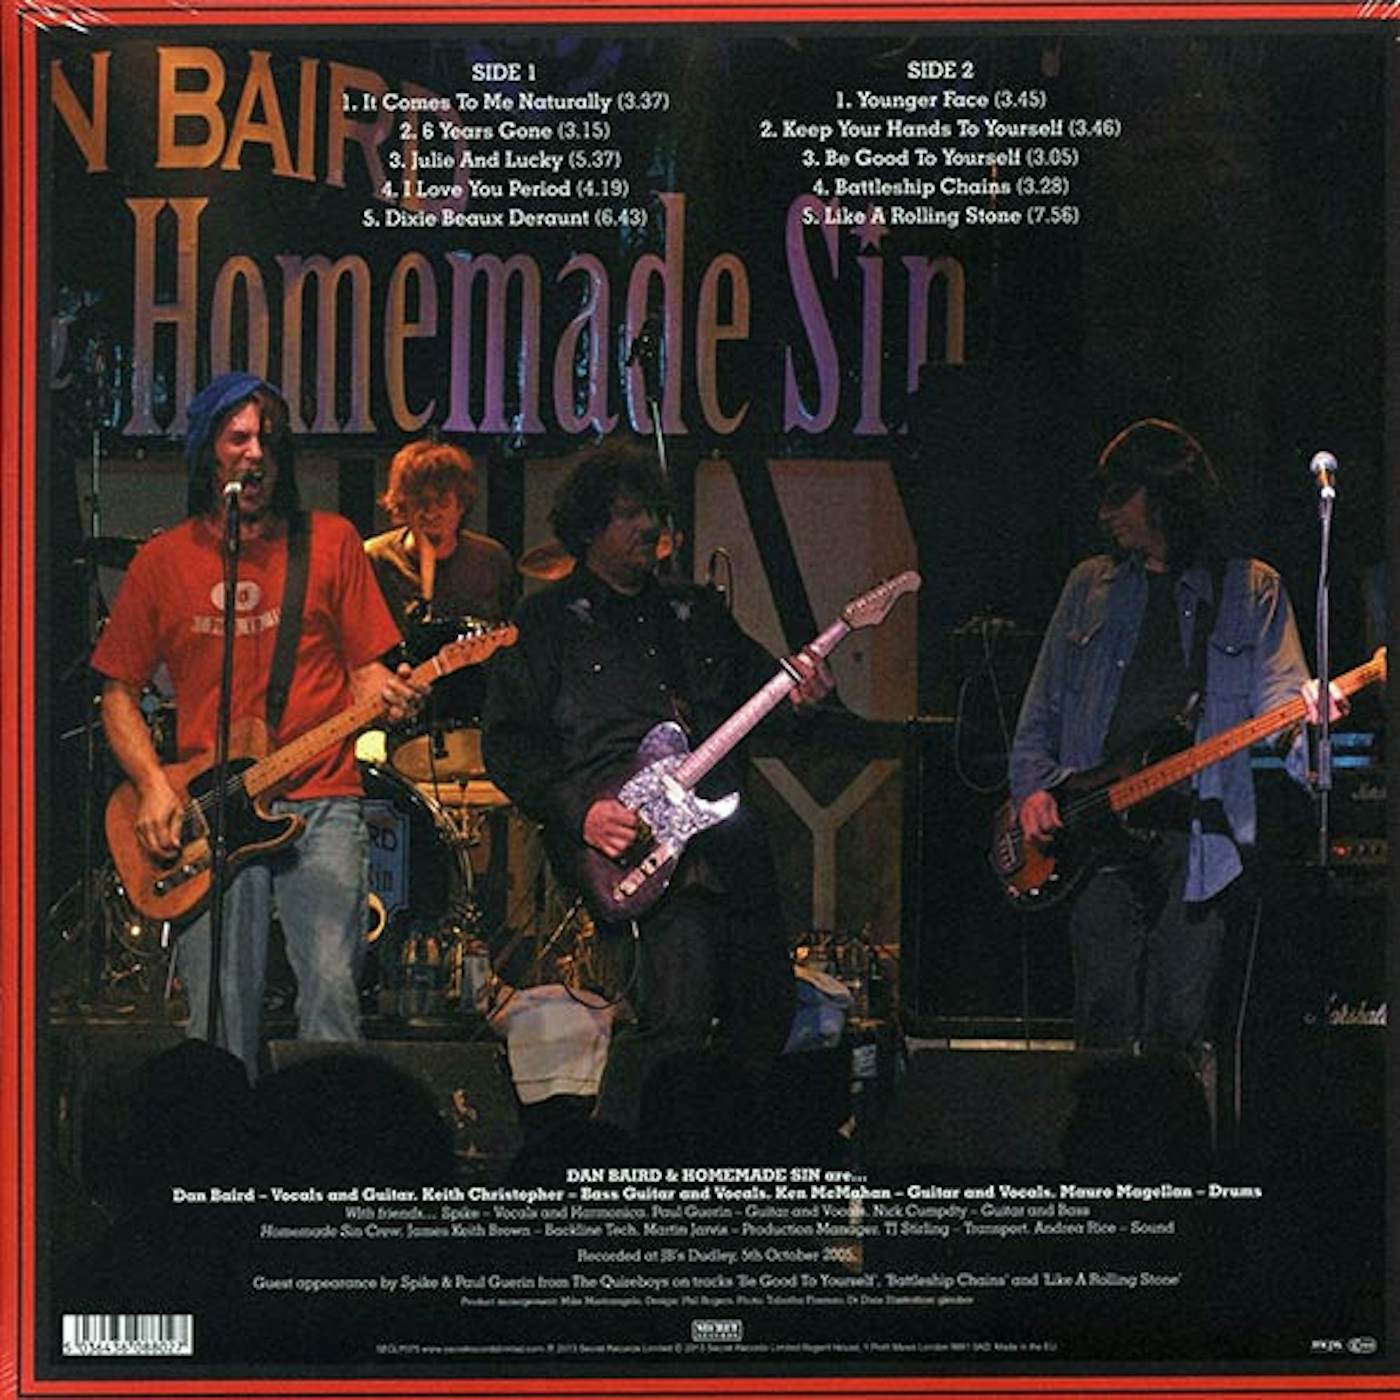 Dan Baird and Homemade Sin  LP -  Dr. Dixie's Rollin' Bones (180g) (Vinyl)